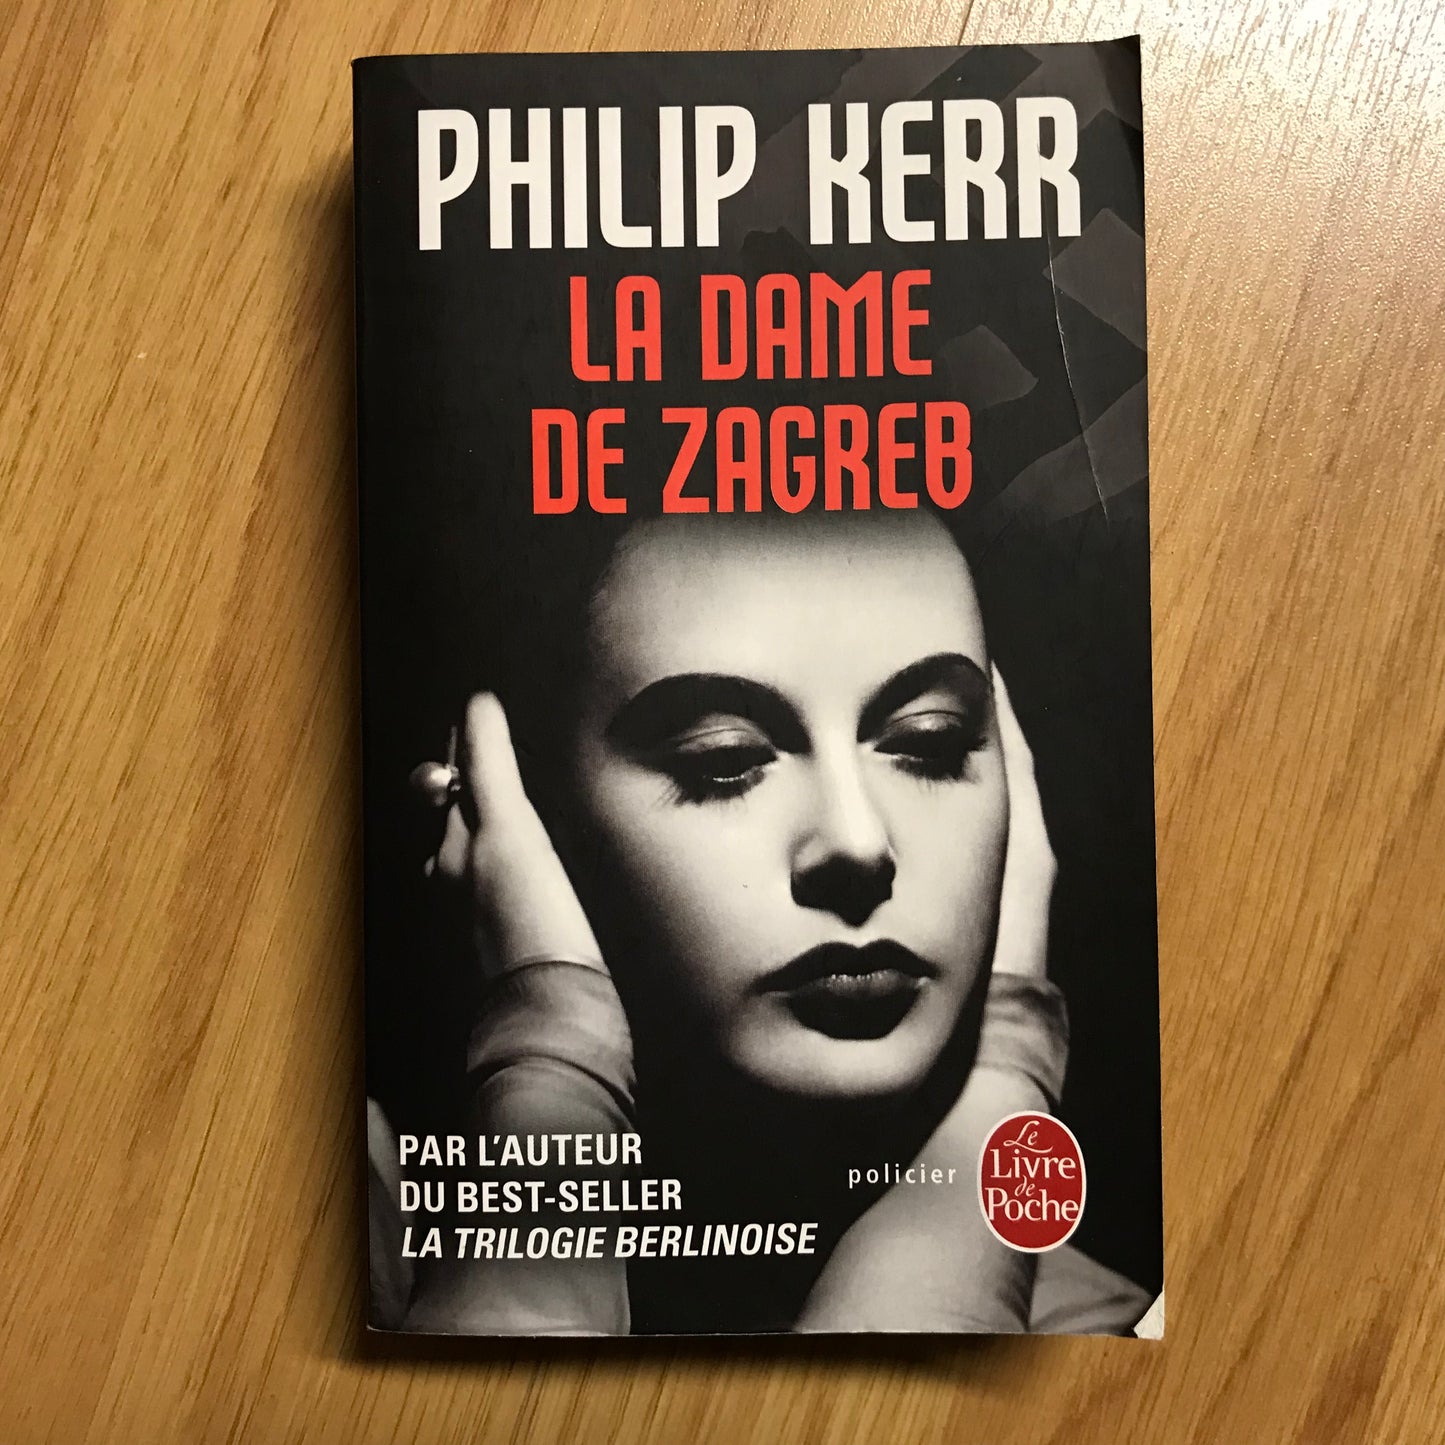 Kerr, Philip - La dame de Zagreb